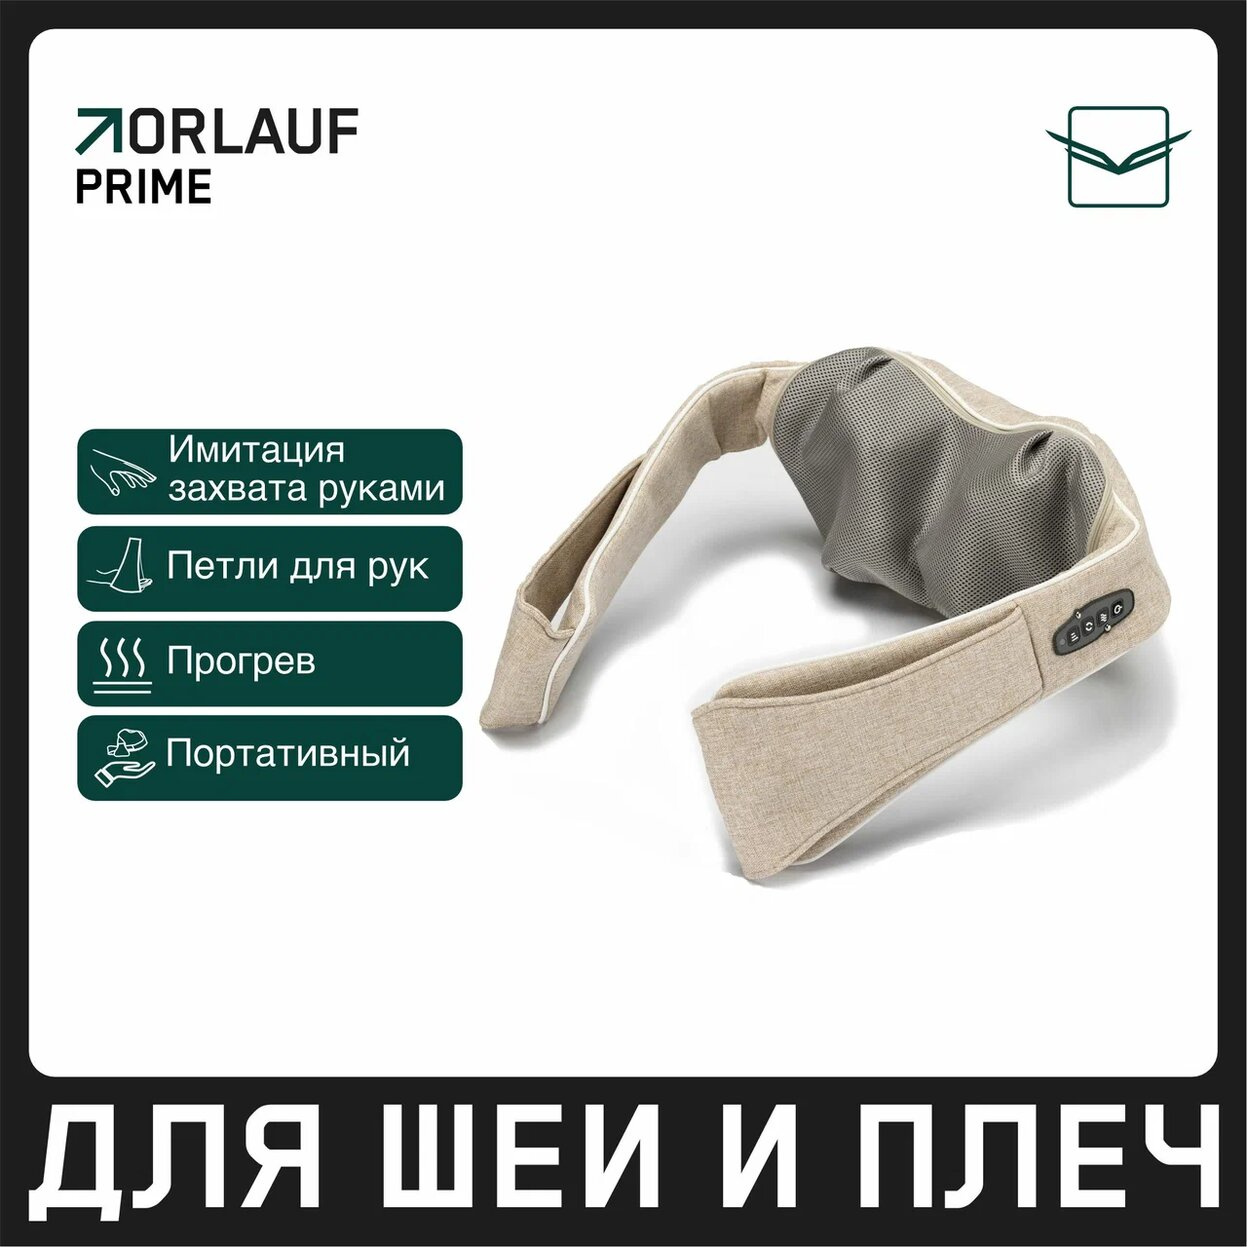 Orlauf Prime из каталога устройств для массажа в Перми по цене 11900 ₽